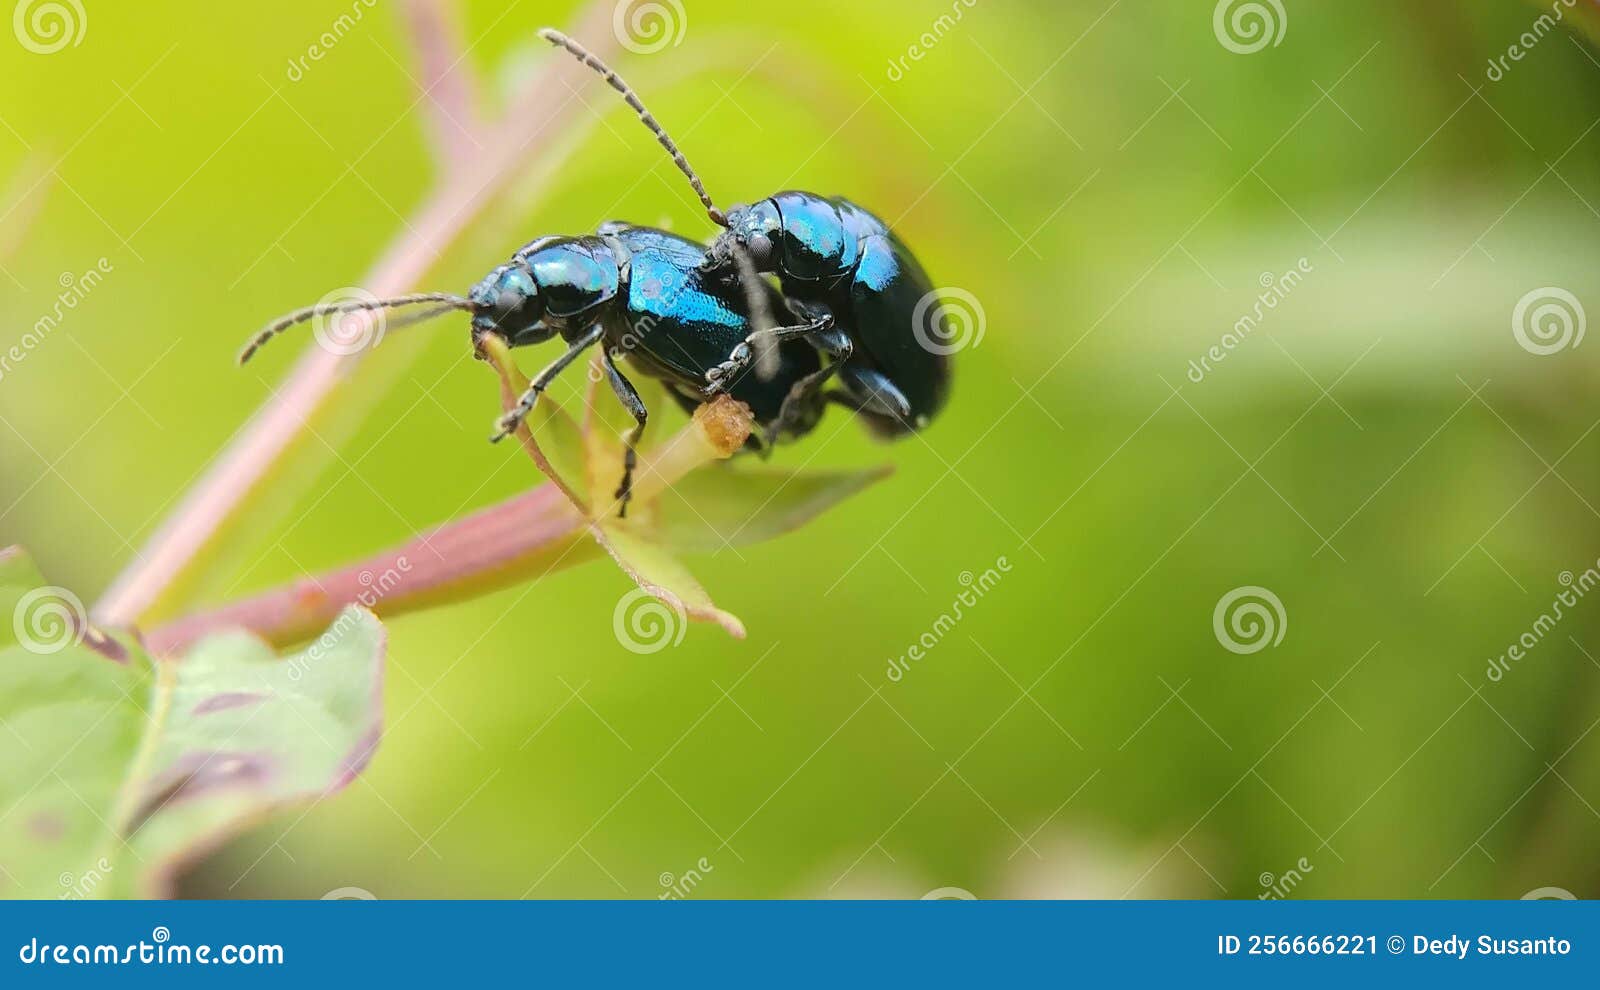 Mating Of Blue Milkweed Beetle Insect Stock Image Image Of Yellow Green 256666221